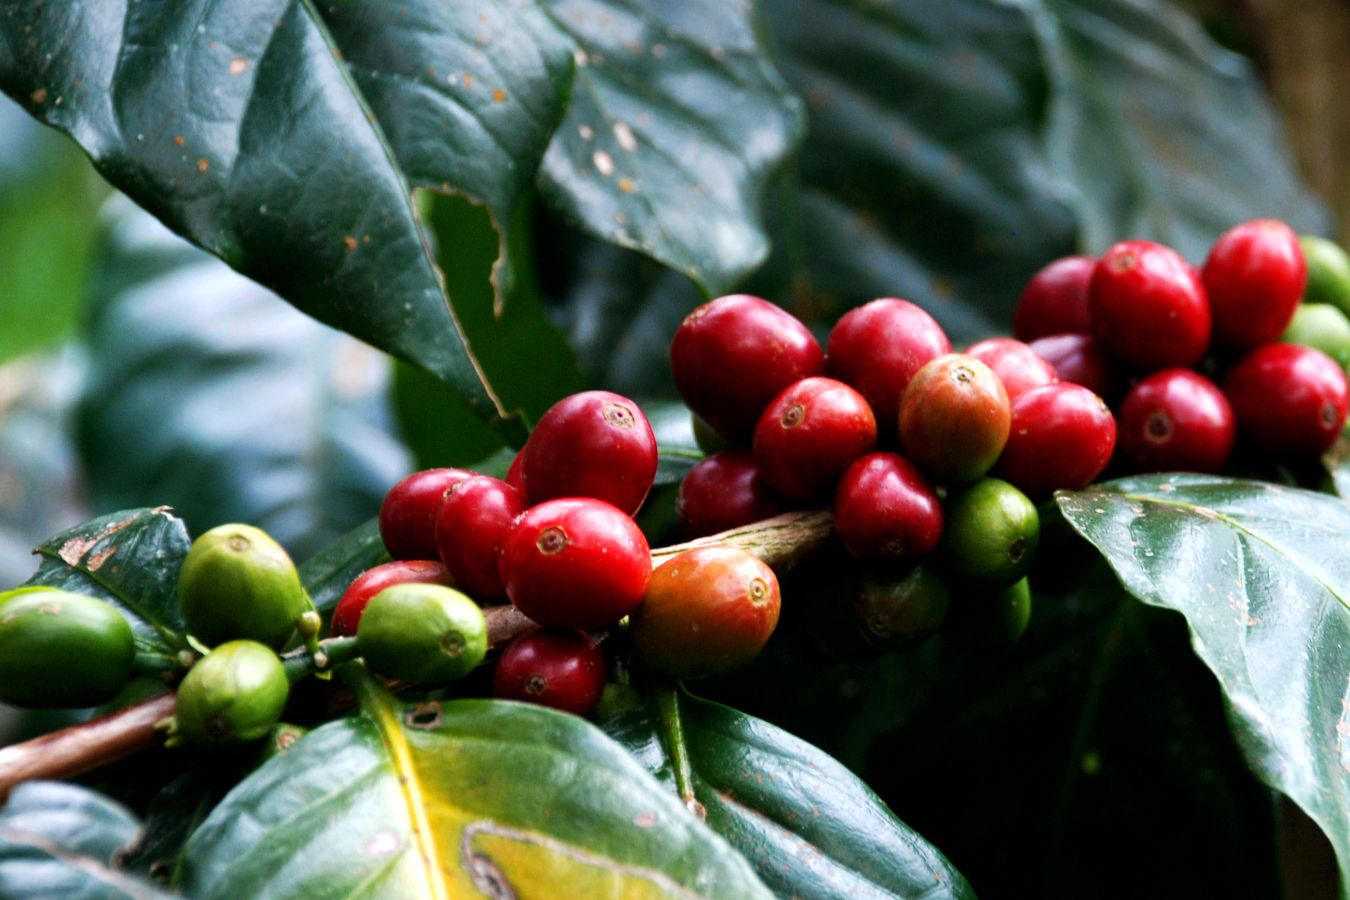 The Coffee Fruit (Coffee berry)